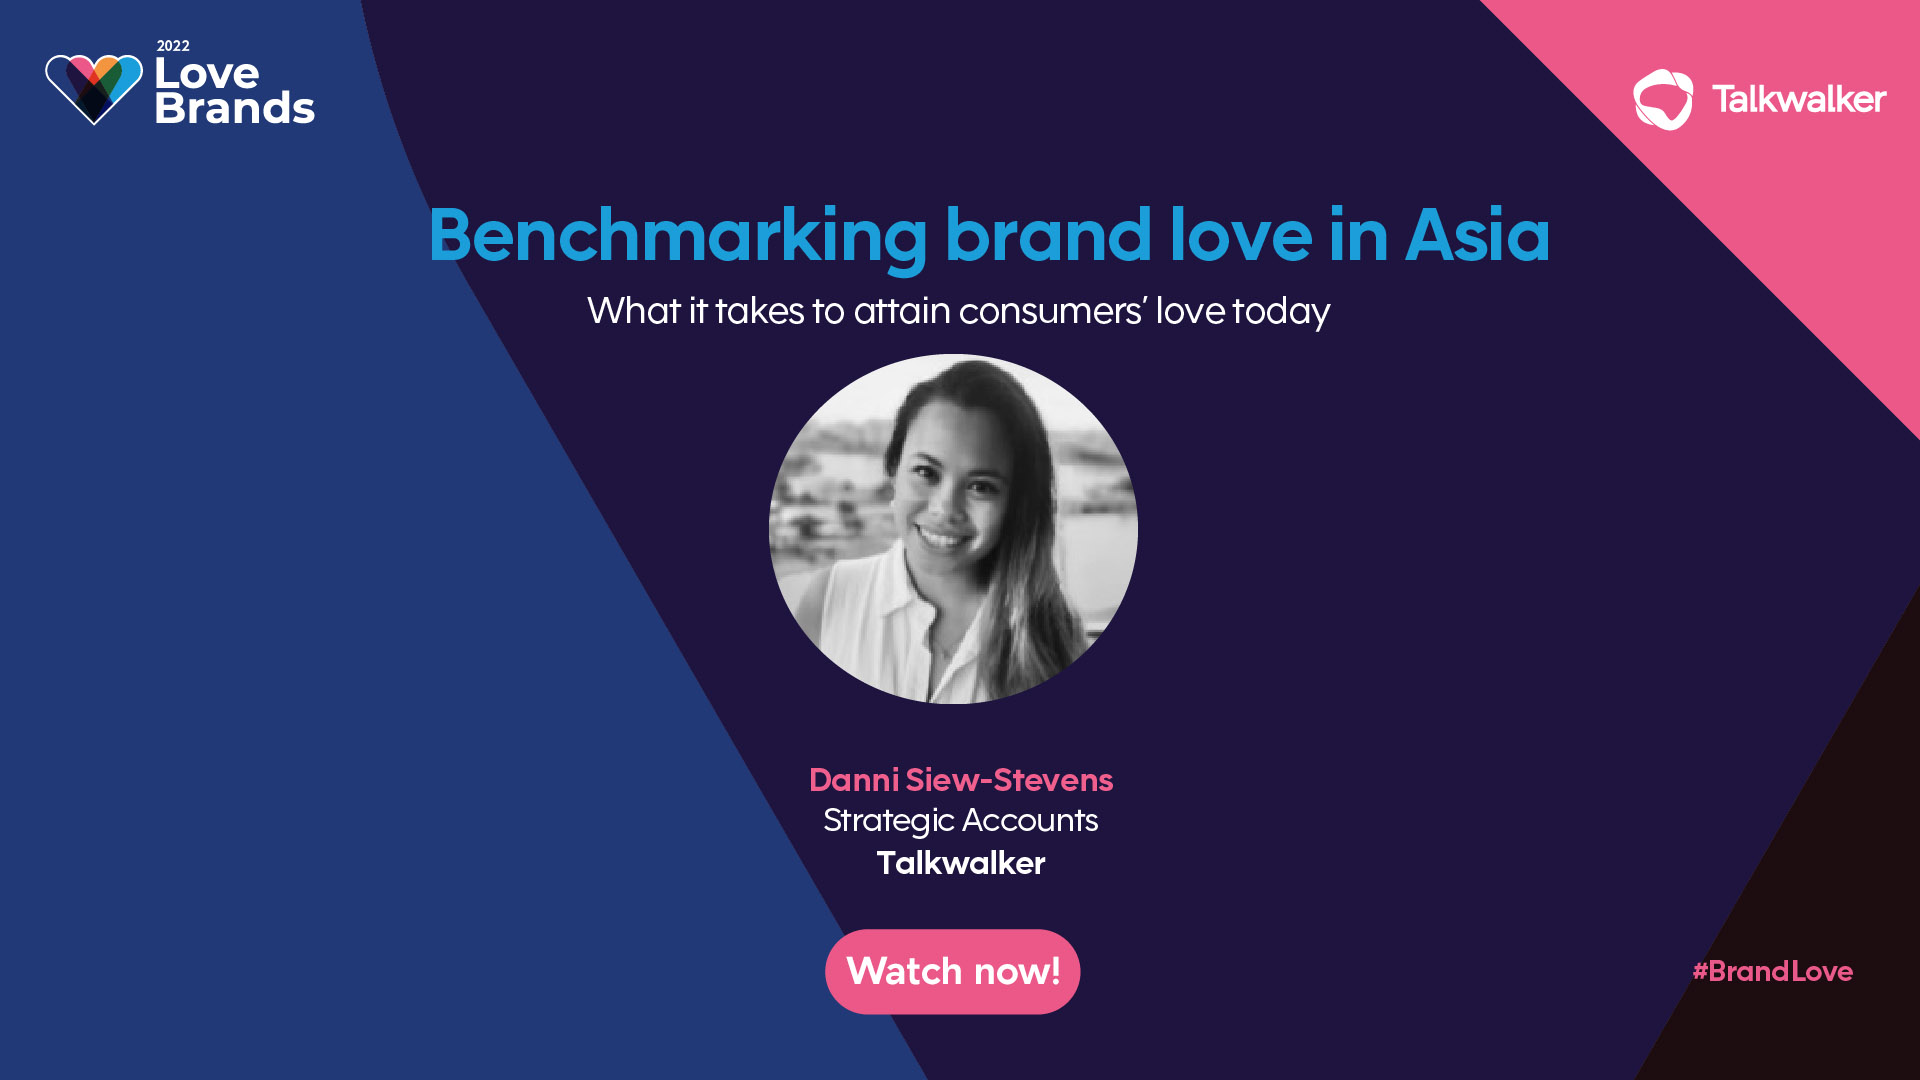 Benchmarking brand love in Asia